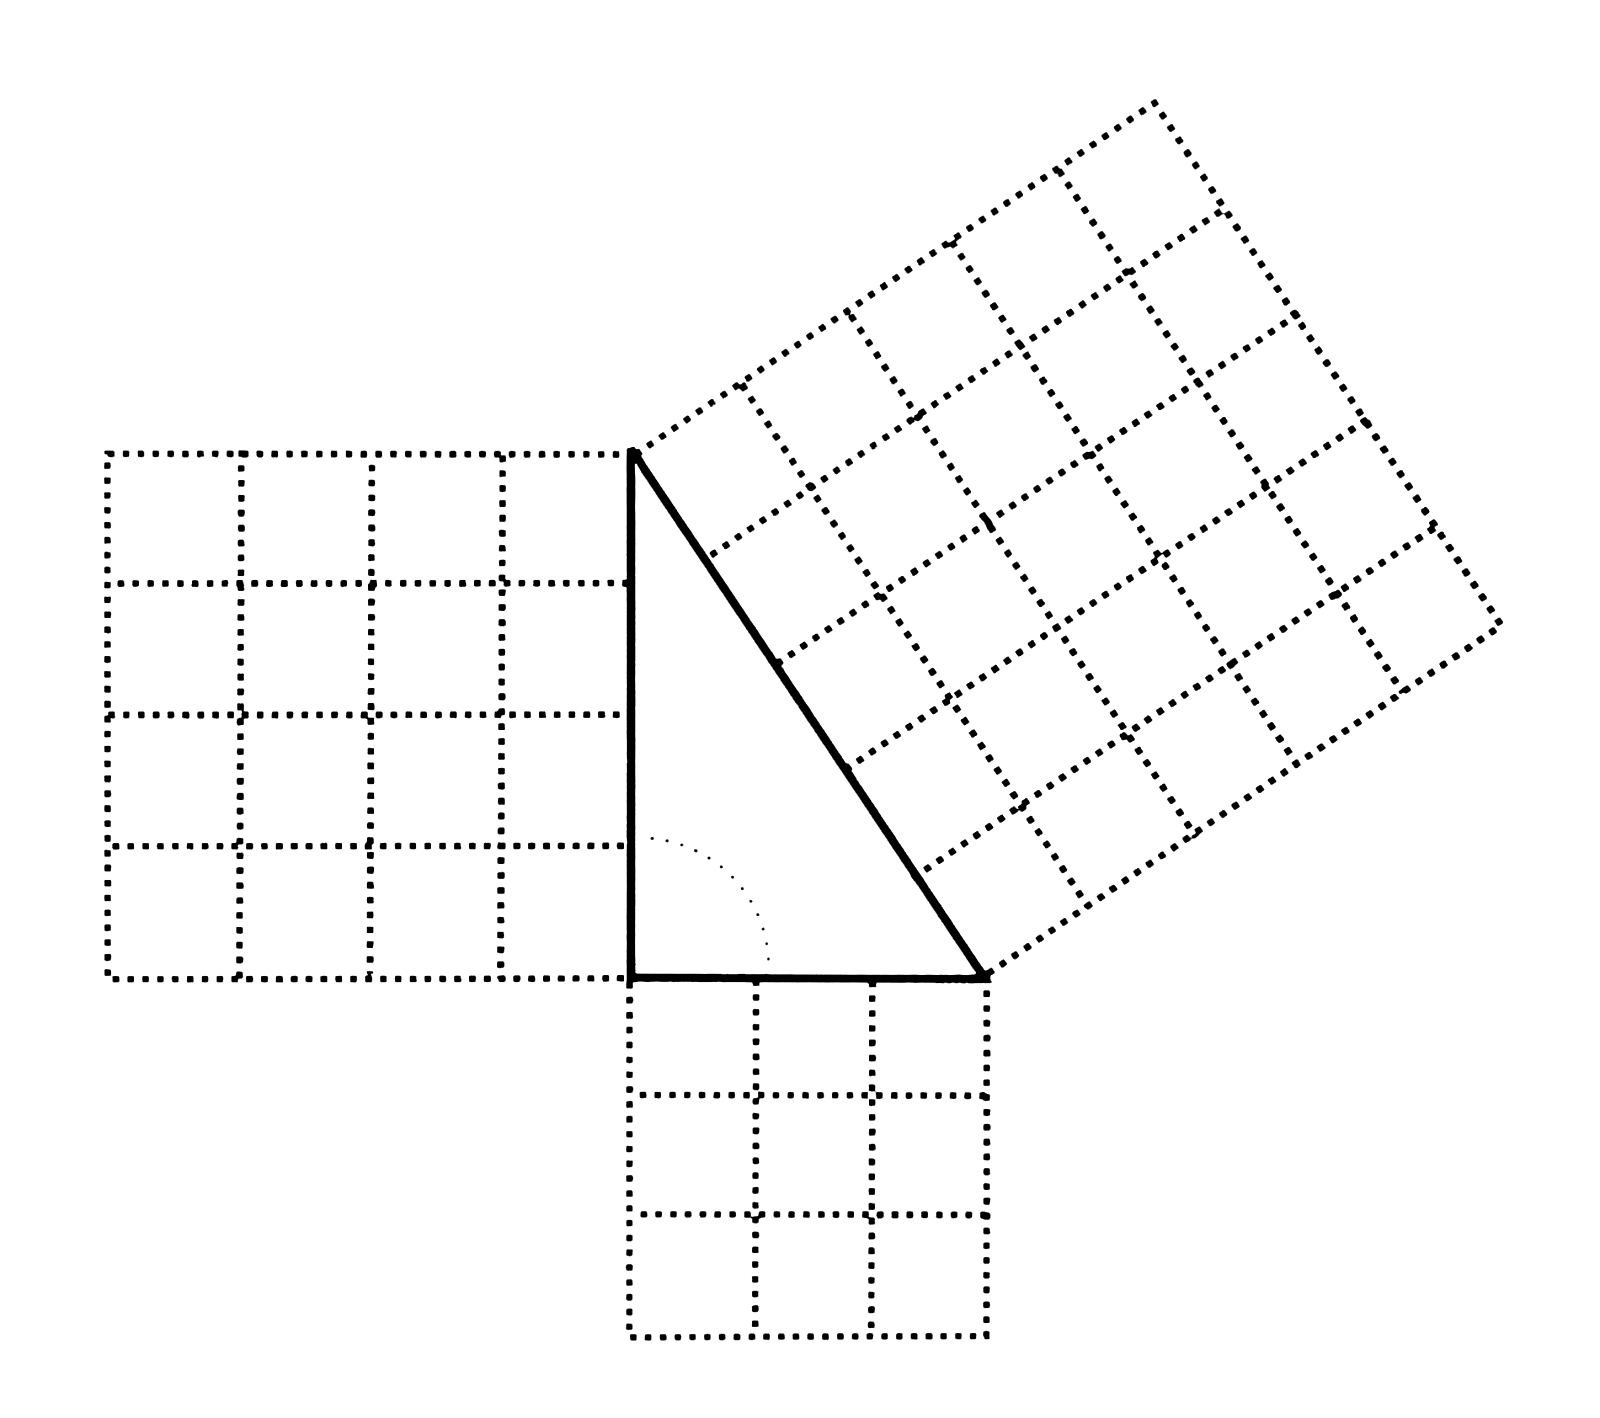 Figure geometriche - Teorema di Pitagora